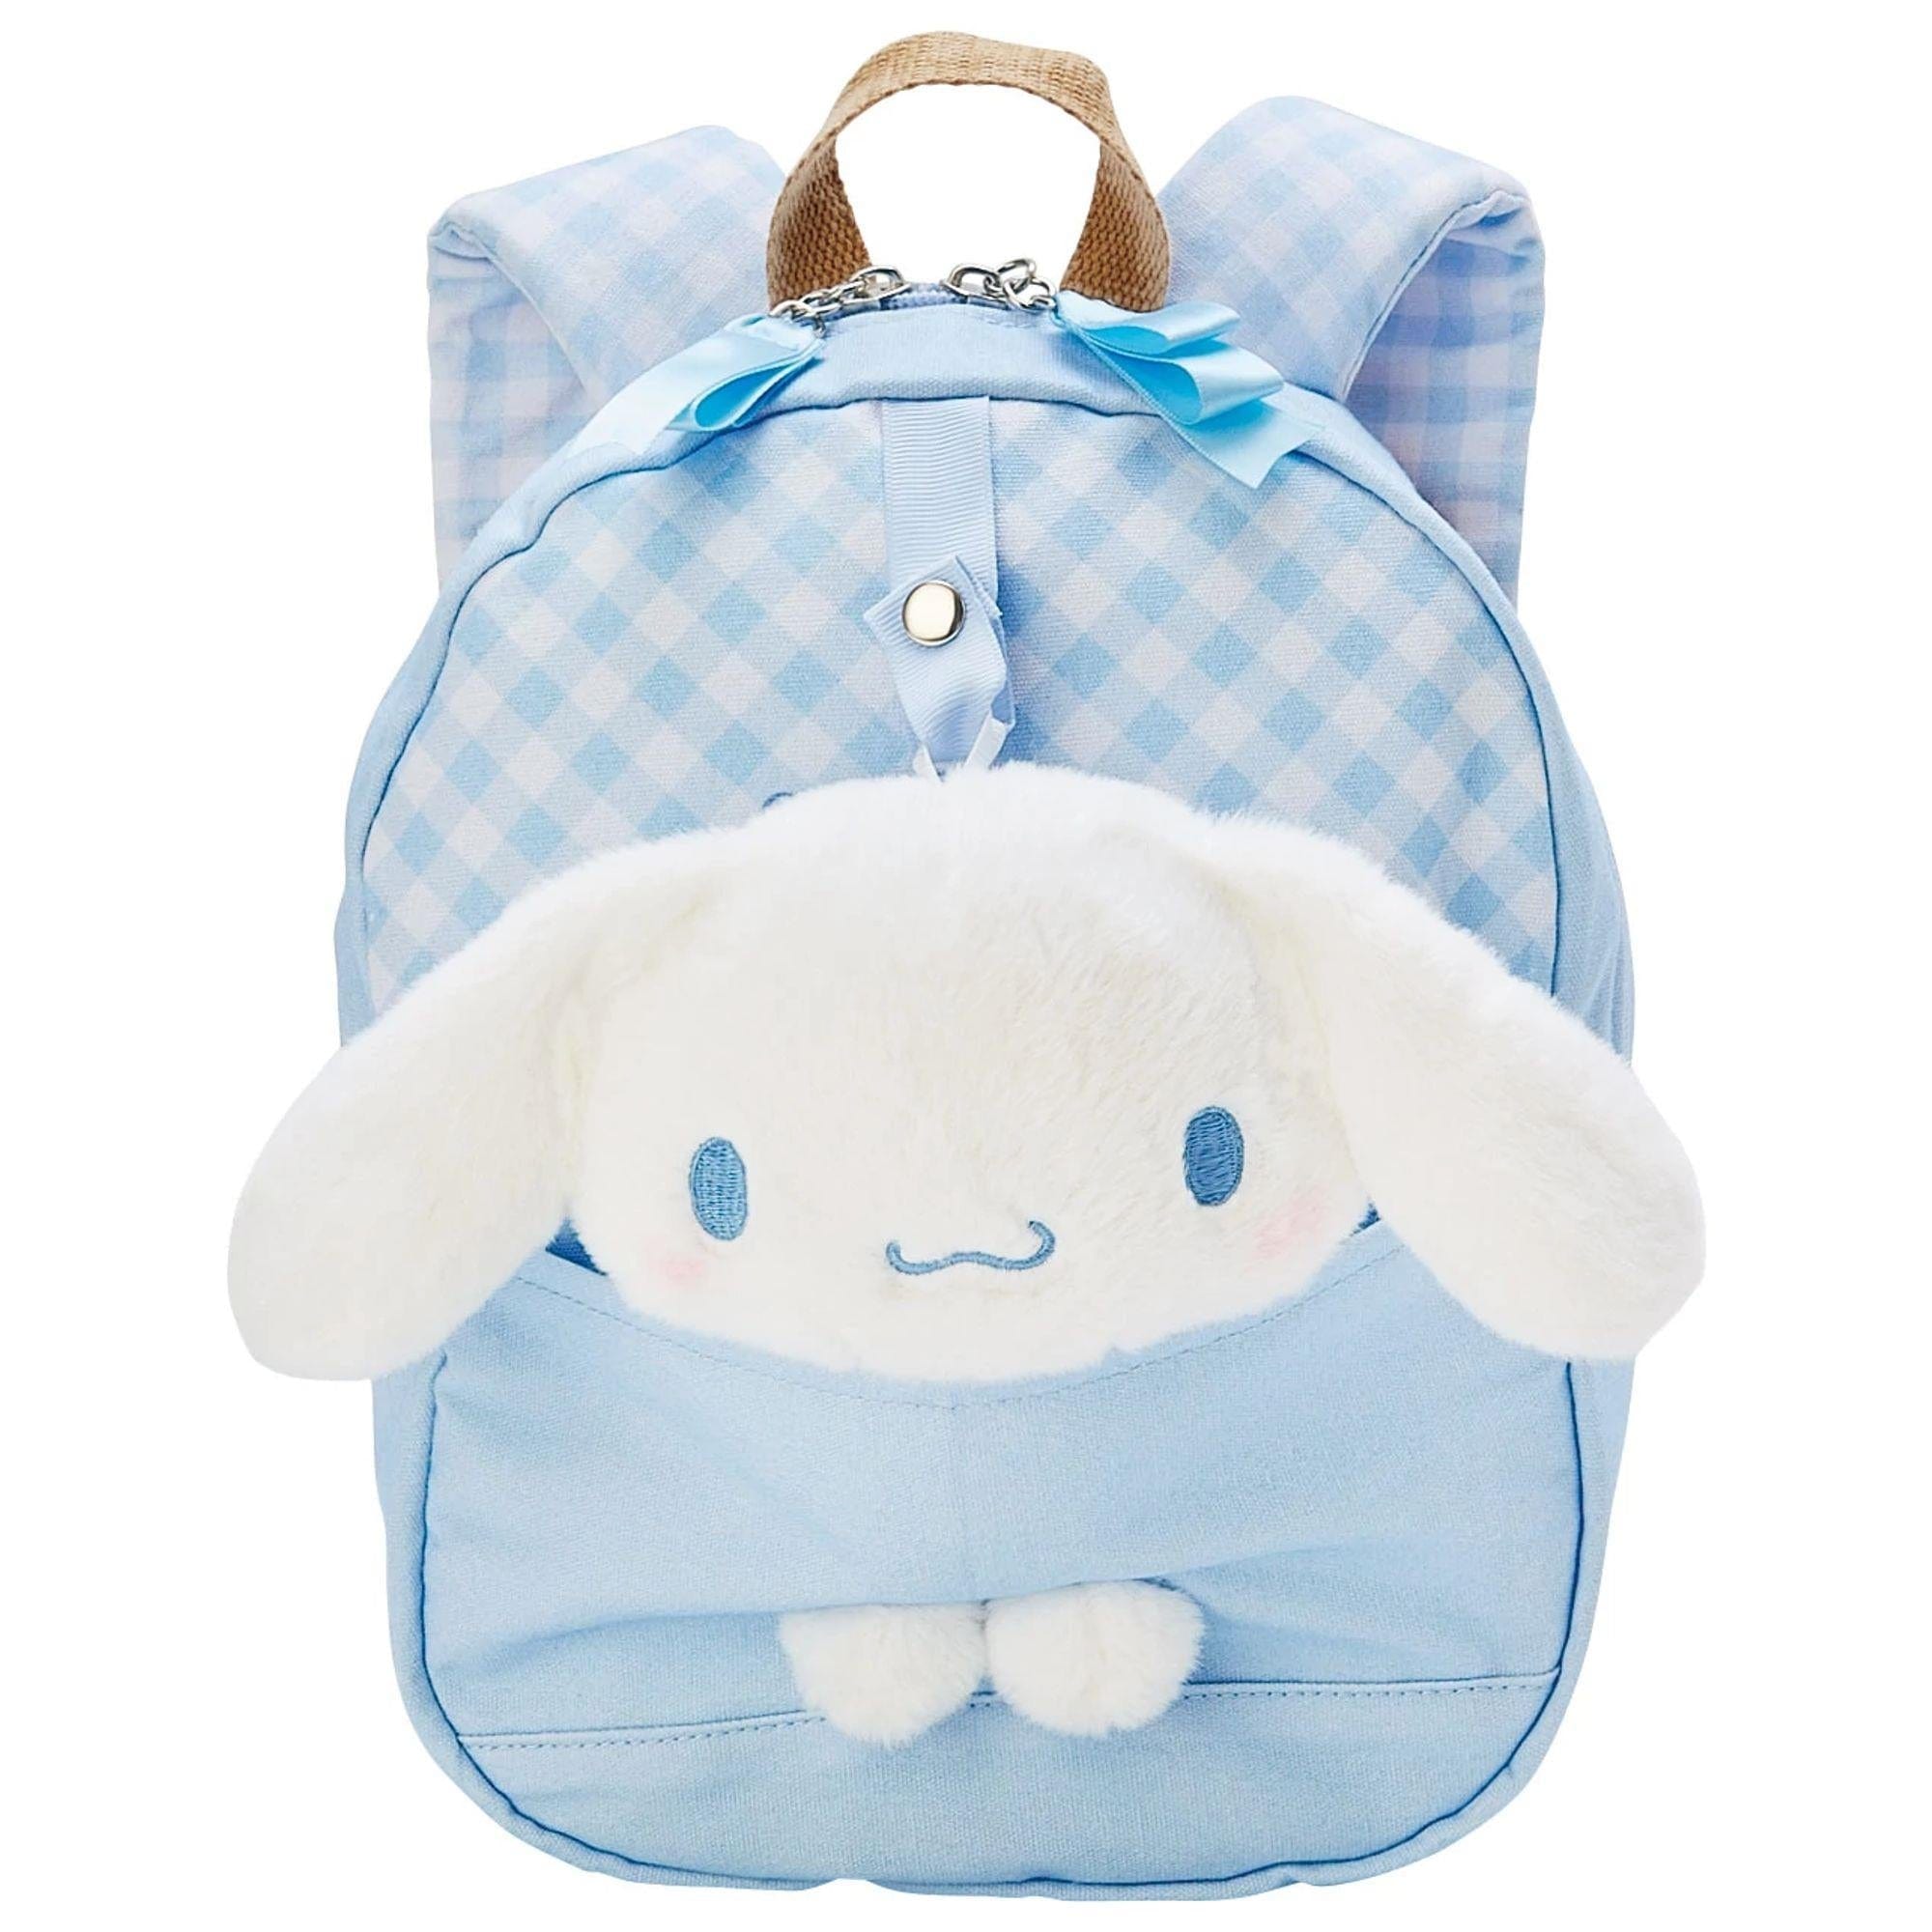 Loungefly Sanrio Hello Kitty Gingham Backpack